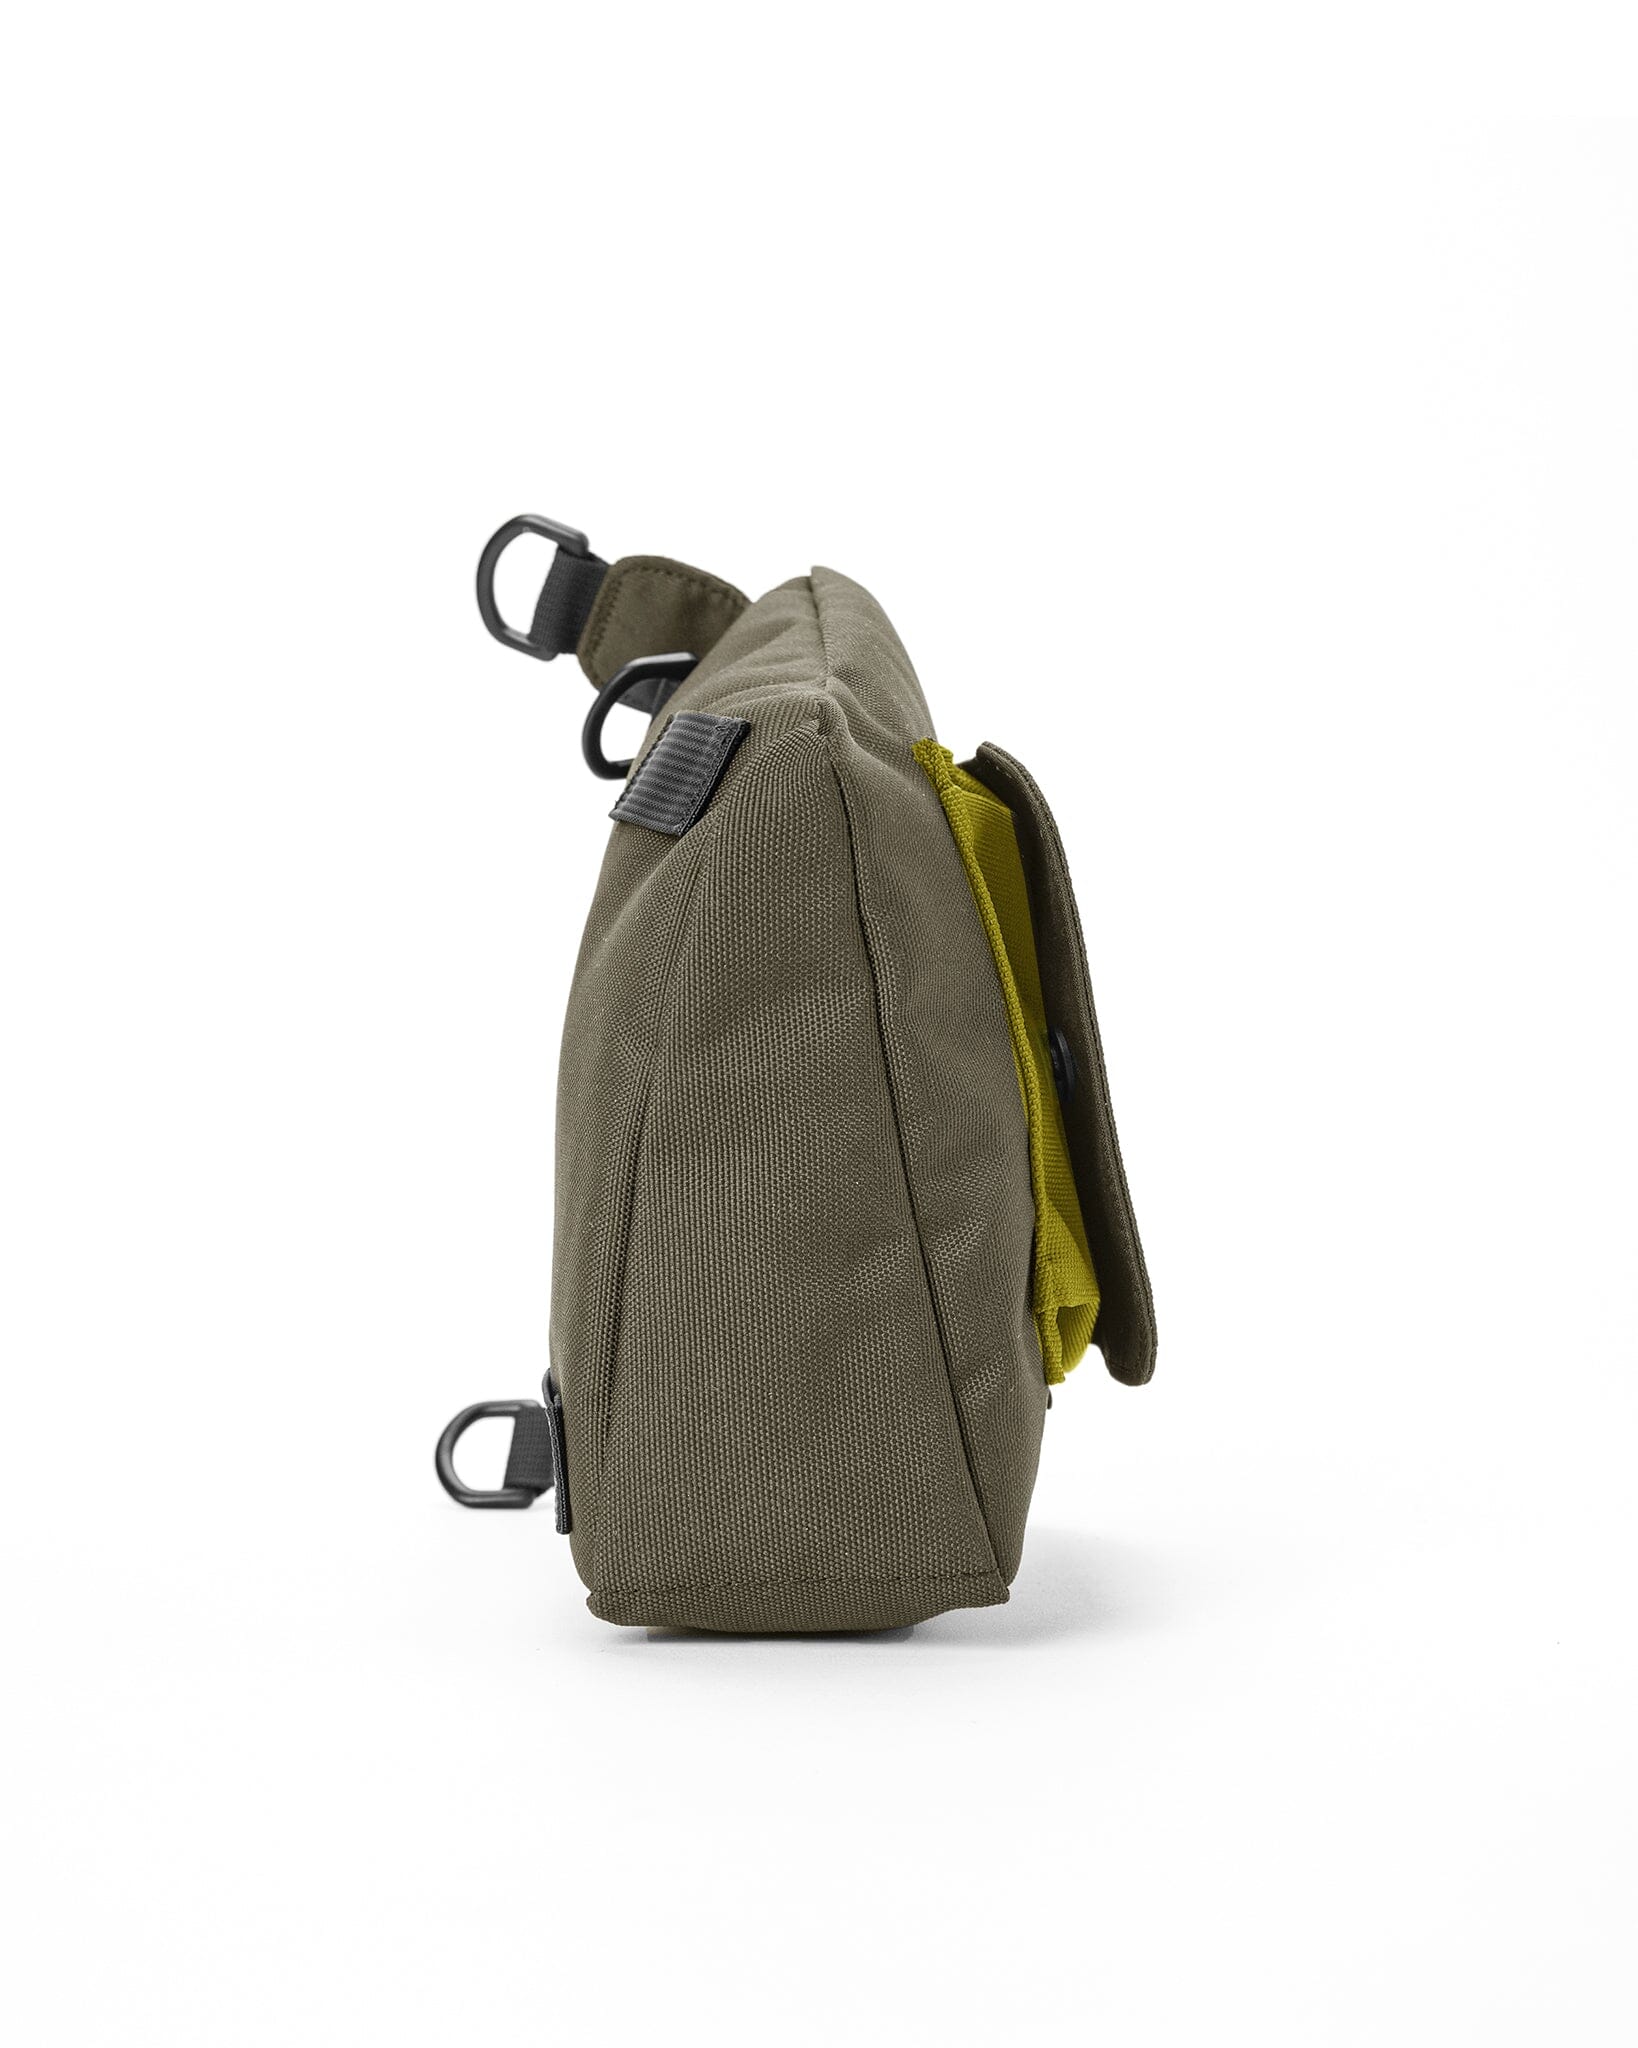 Small Carry - Defiant Olive Cordura Bag bolstr   